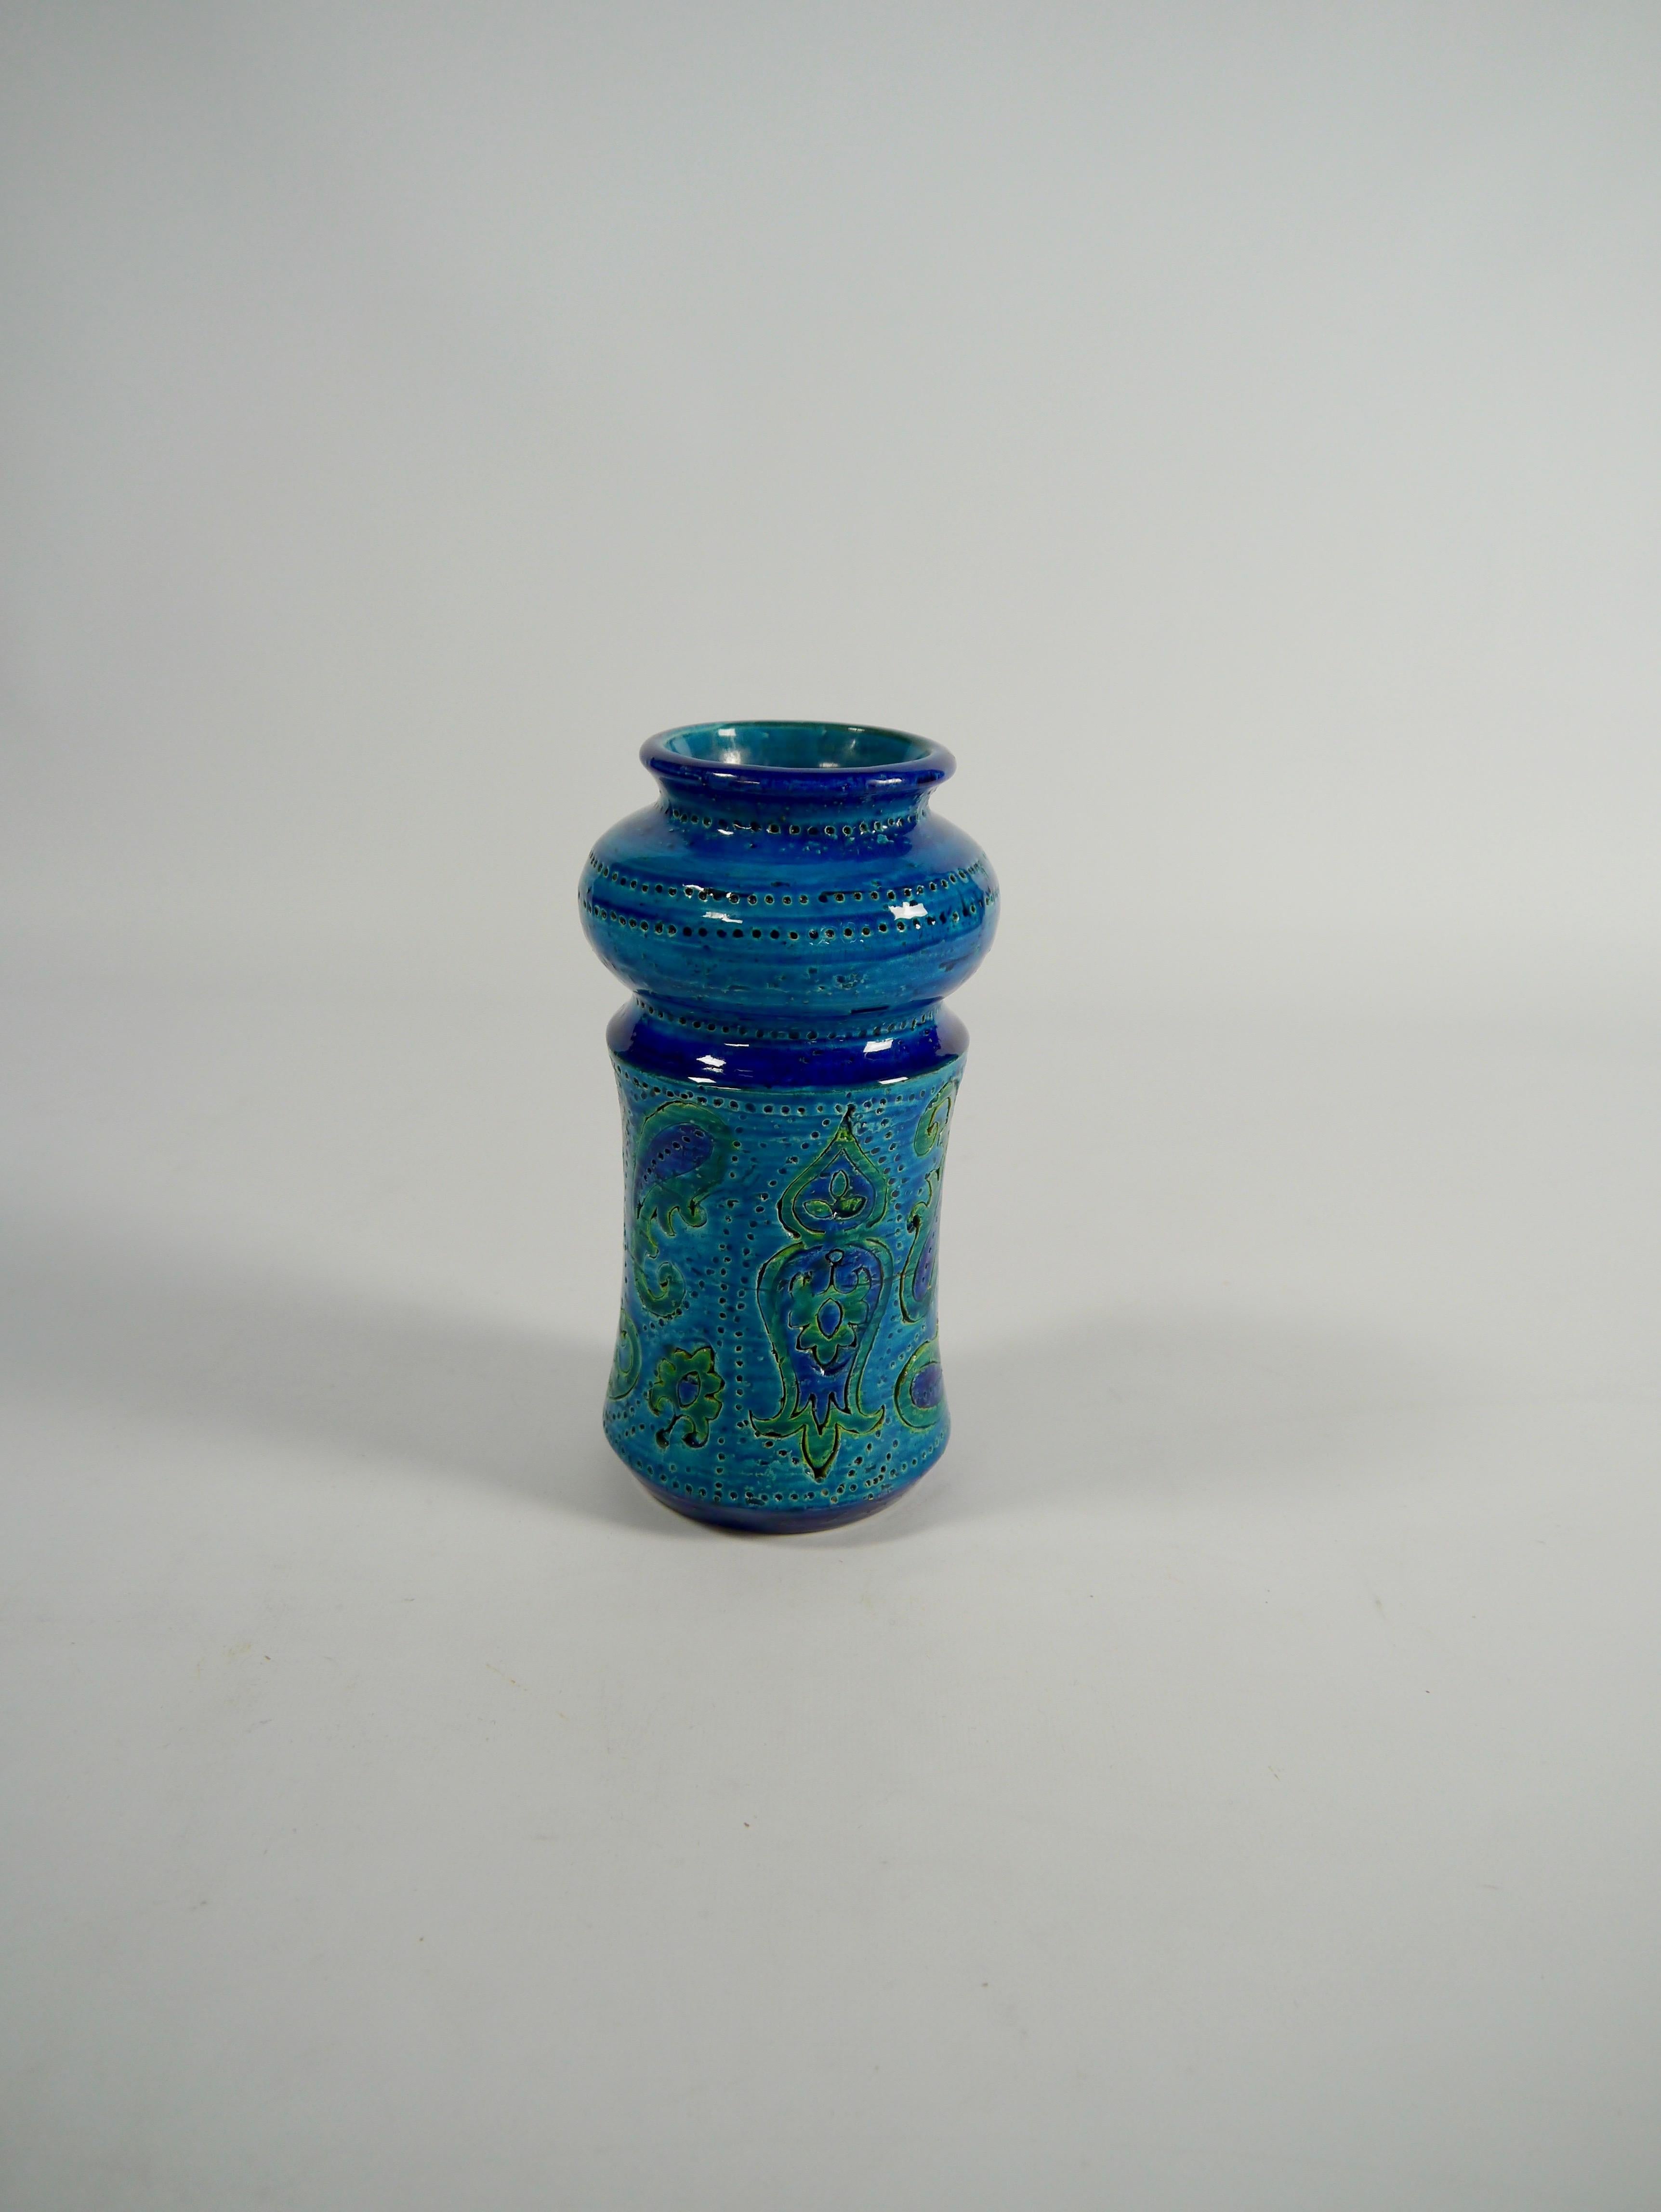 Rimini blue glazed ceramic vase, designed by Aldo Londi and fabricated by Bitossi, Italy 1960s.